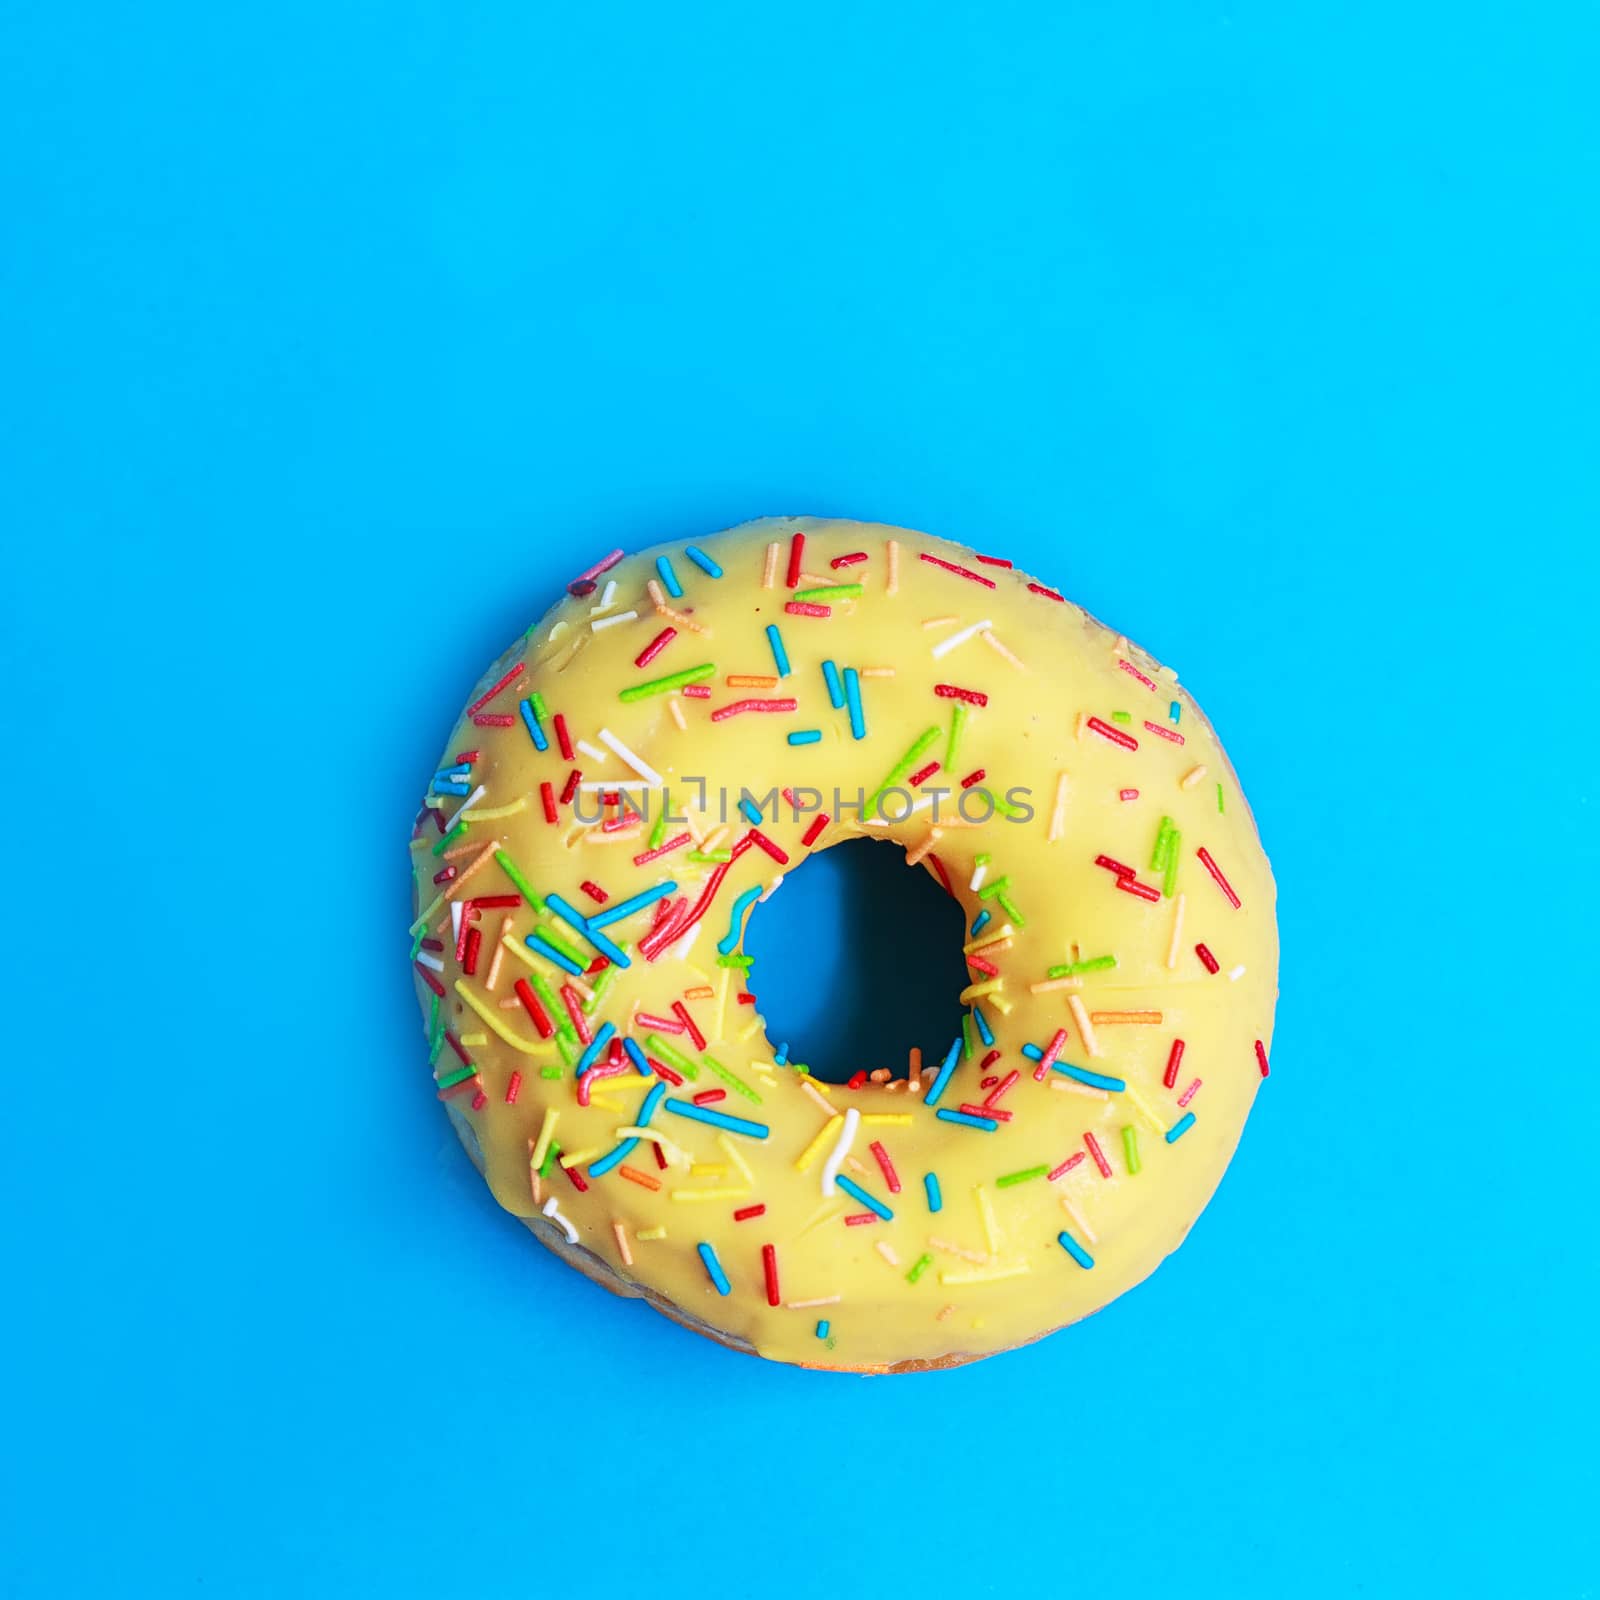 Donut on blue background by victosha